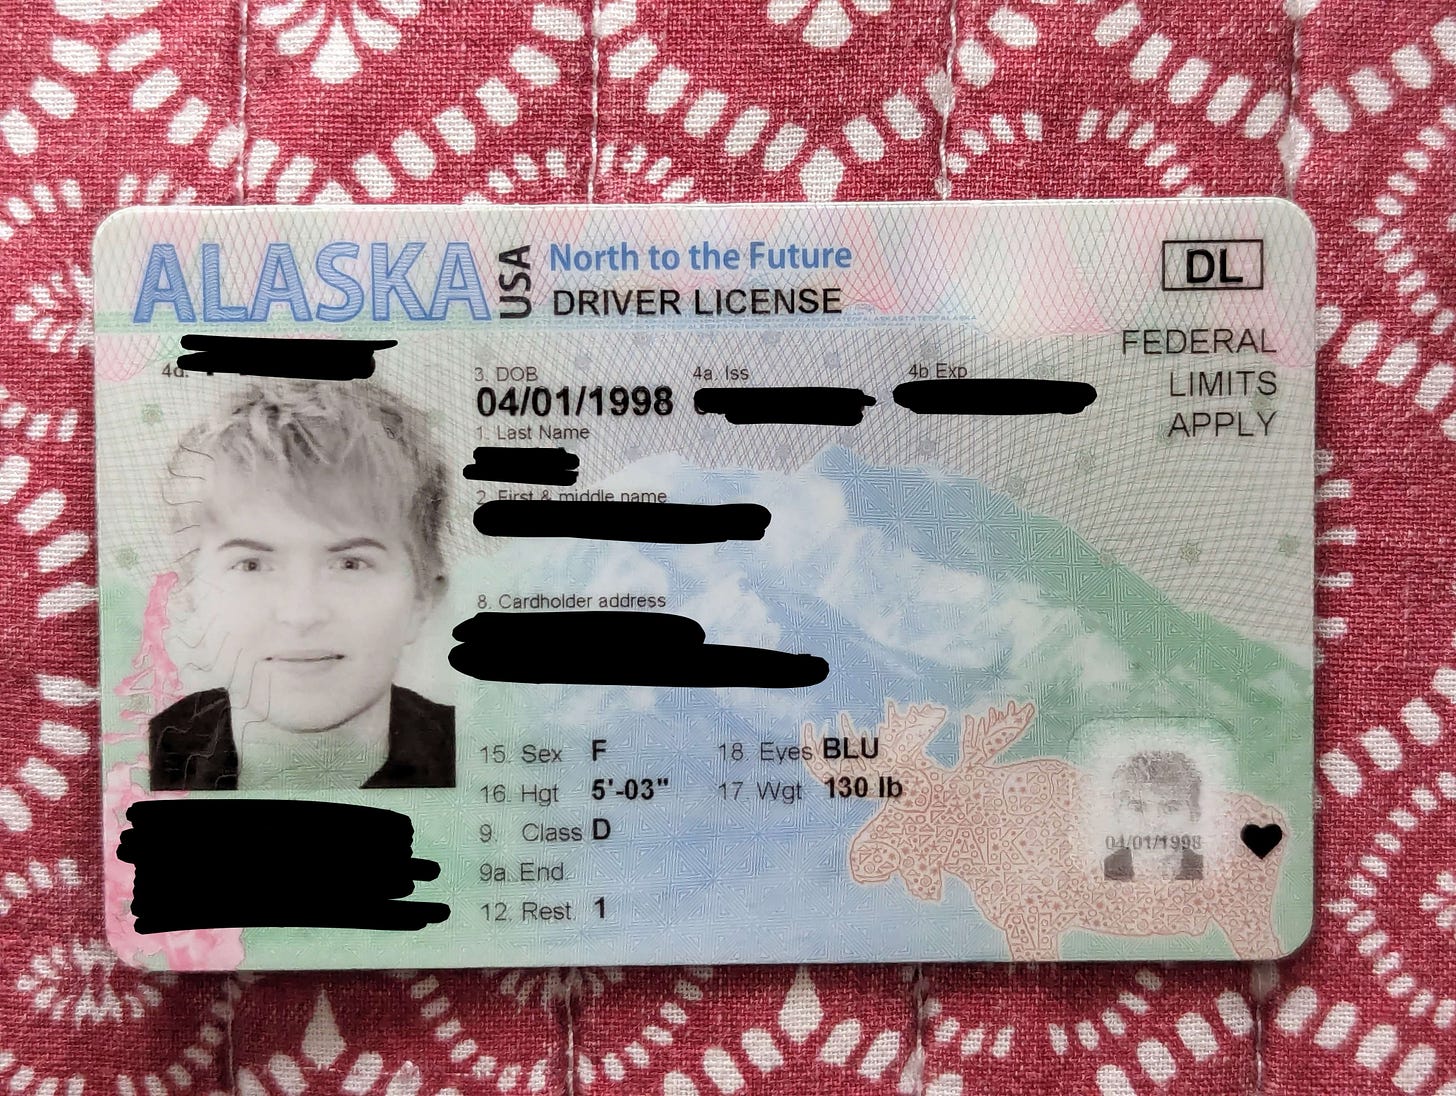 Atlas's Alaska Driver's License that proves their birthdate is 04/01/1998